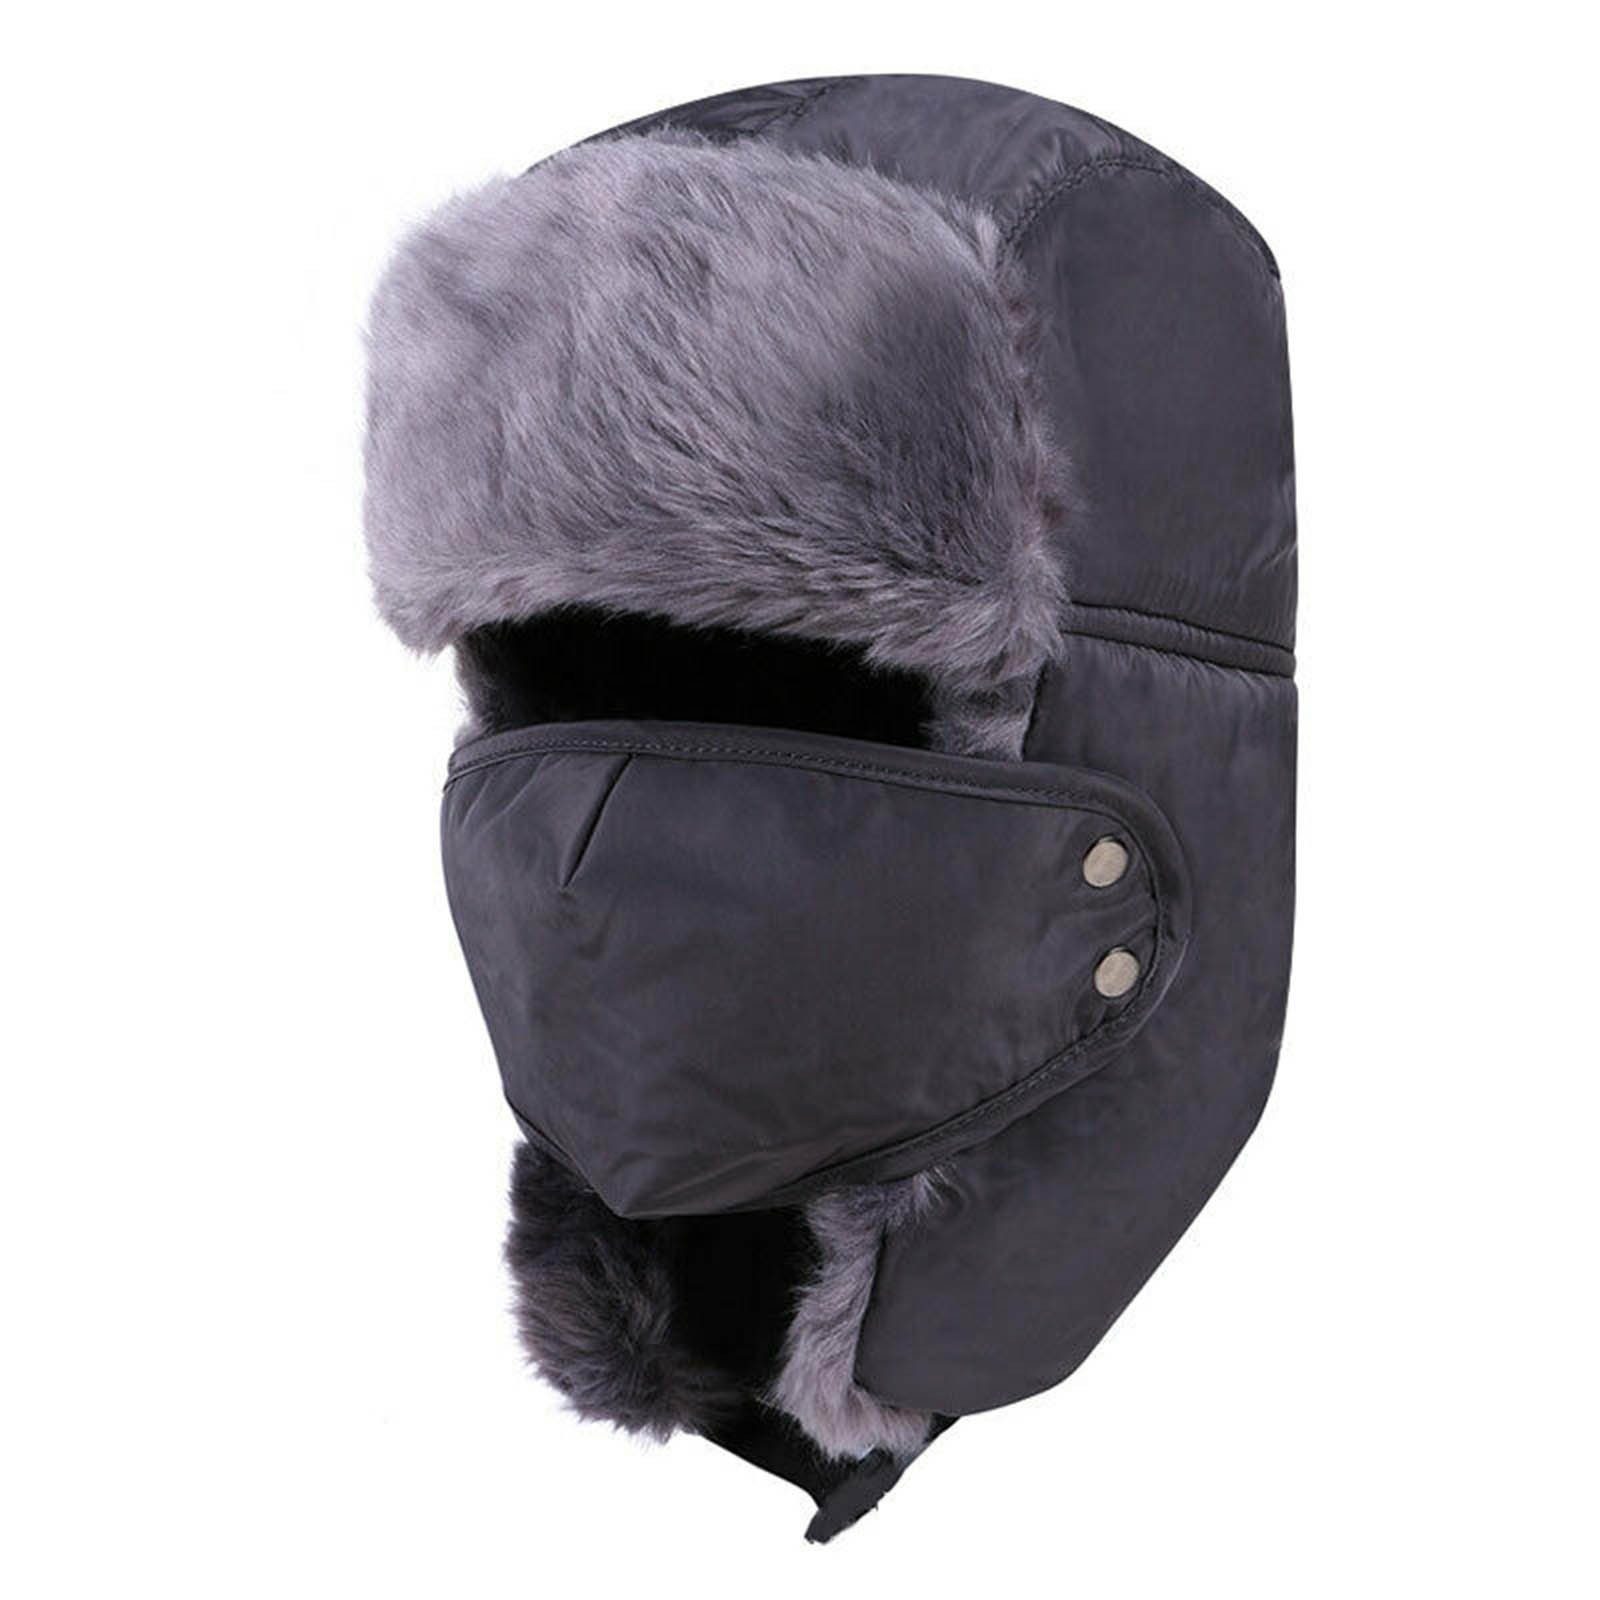 Blusmart Fleecemütze Winter Plüsch Hüte Kälte-Proof Ohr Warme Kappe Outdoor Winddicht grau